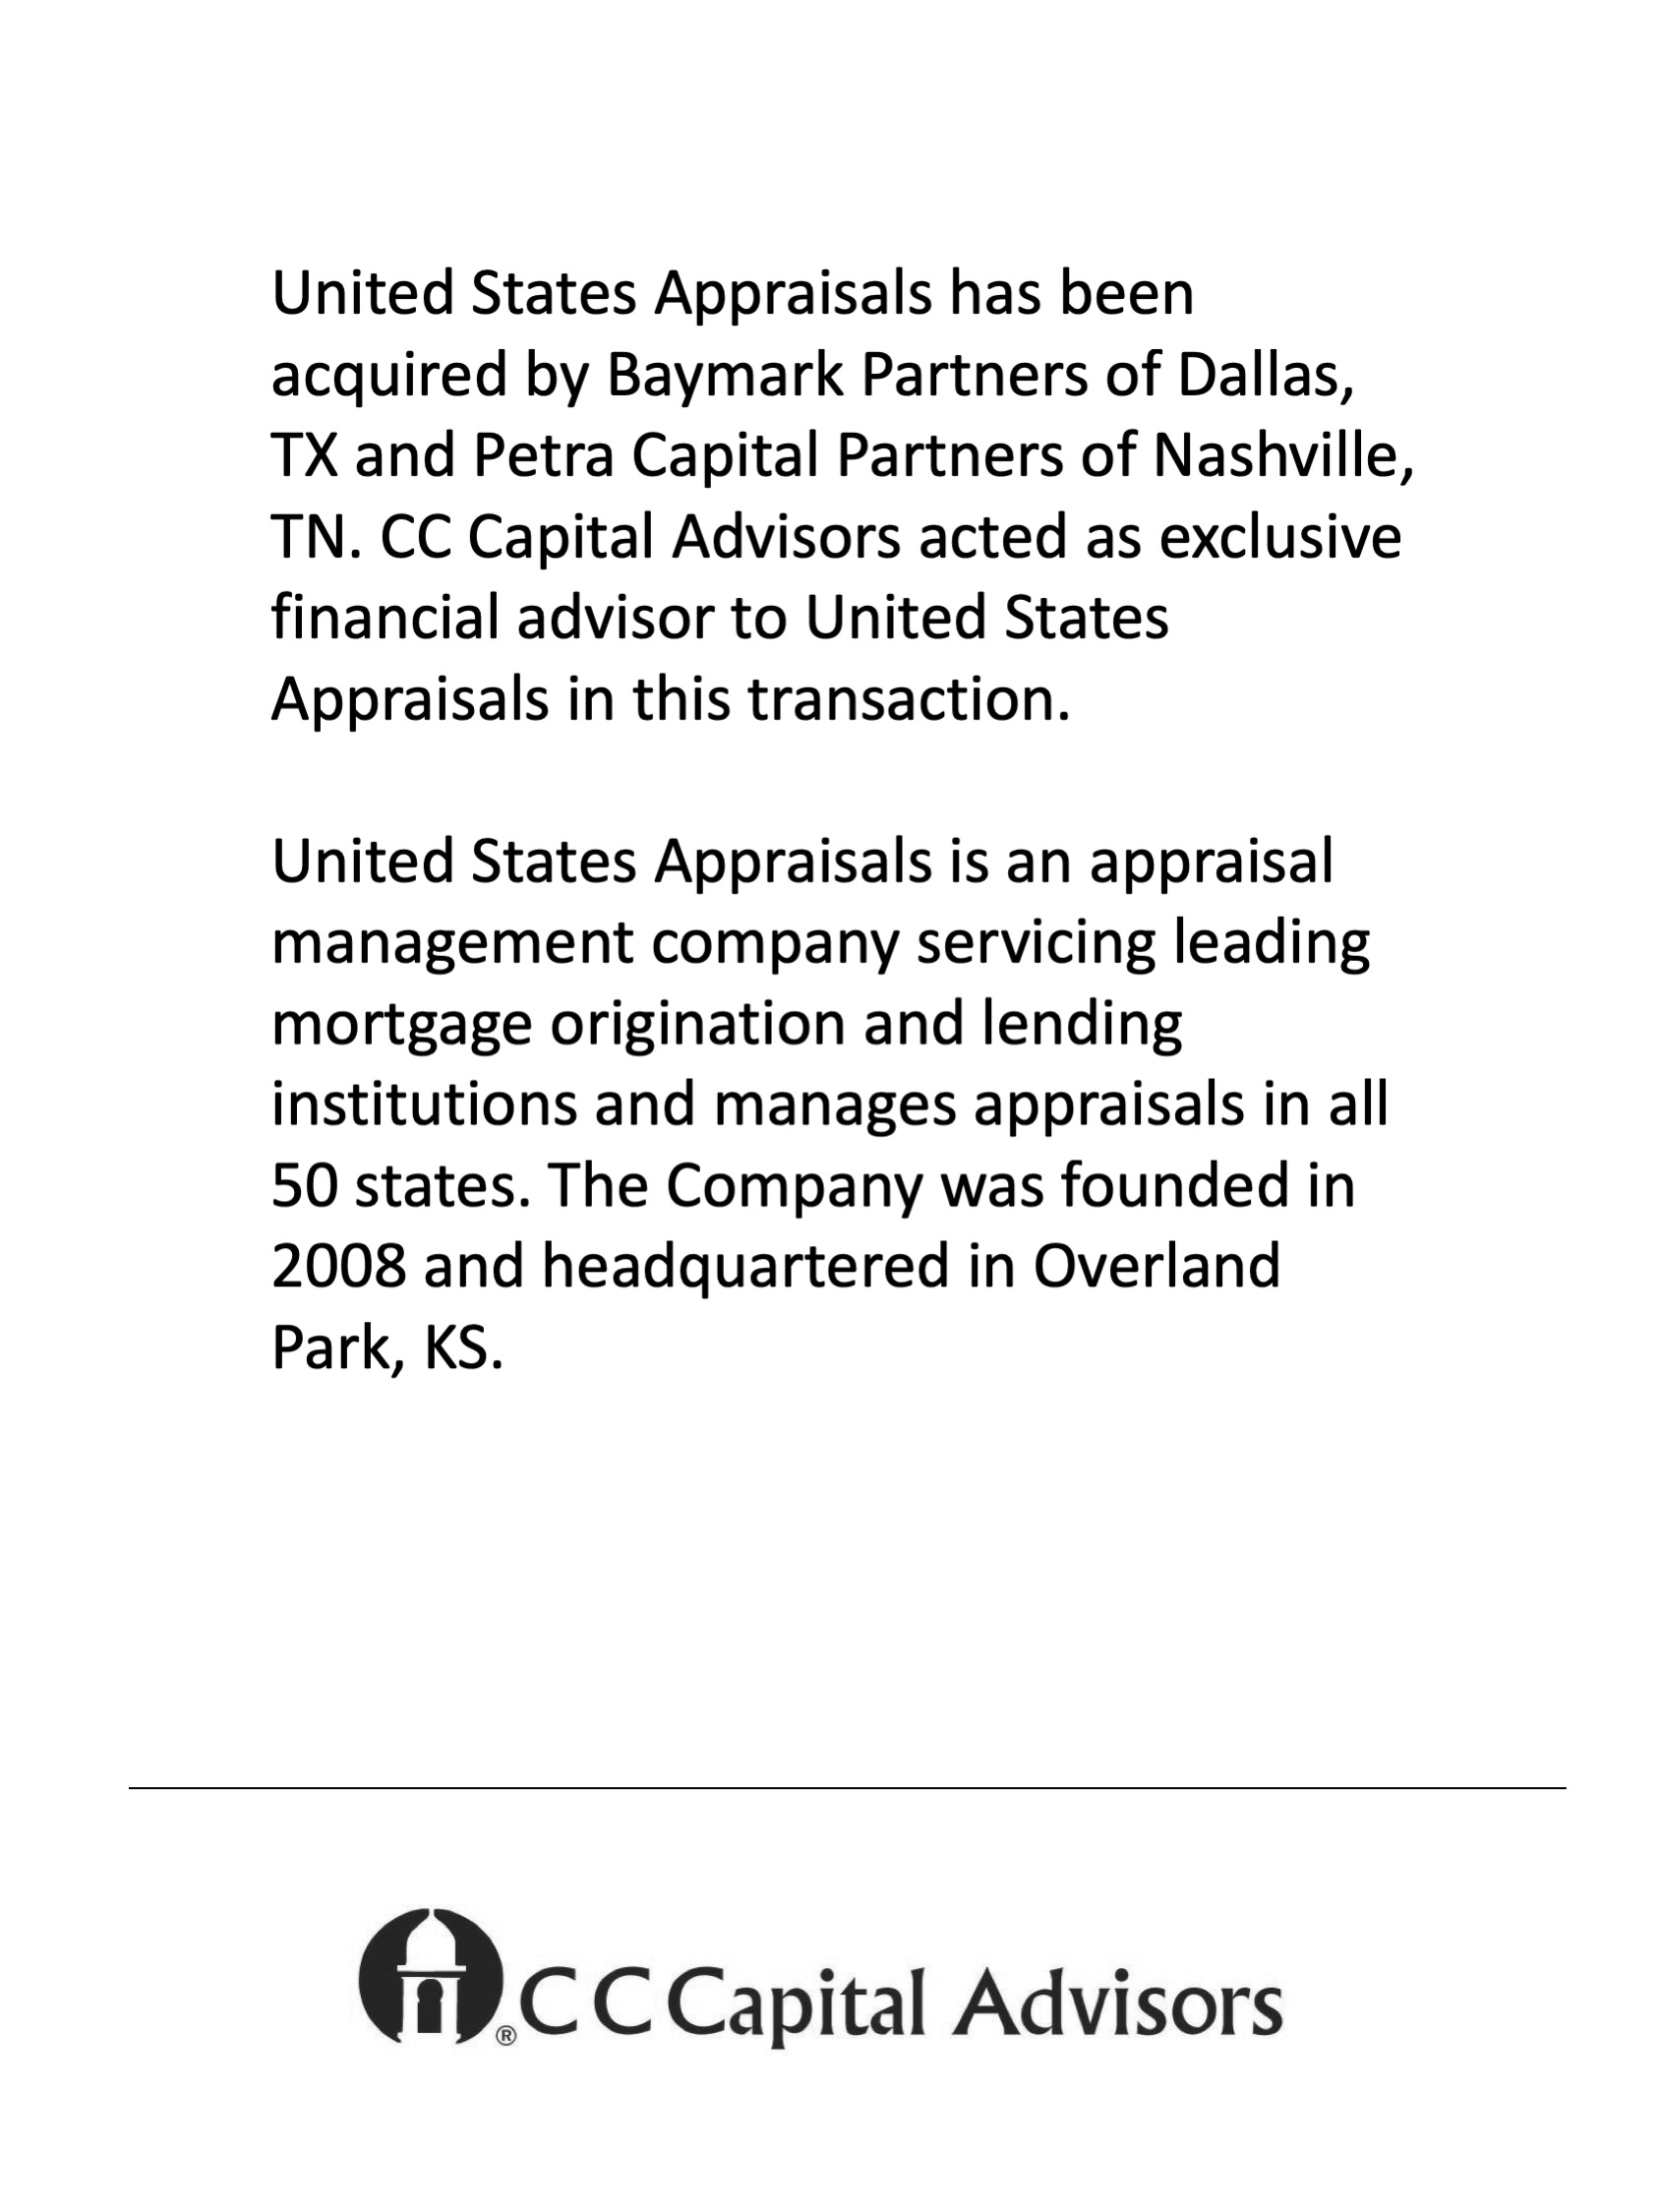 United States Appraisals transaction